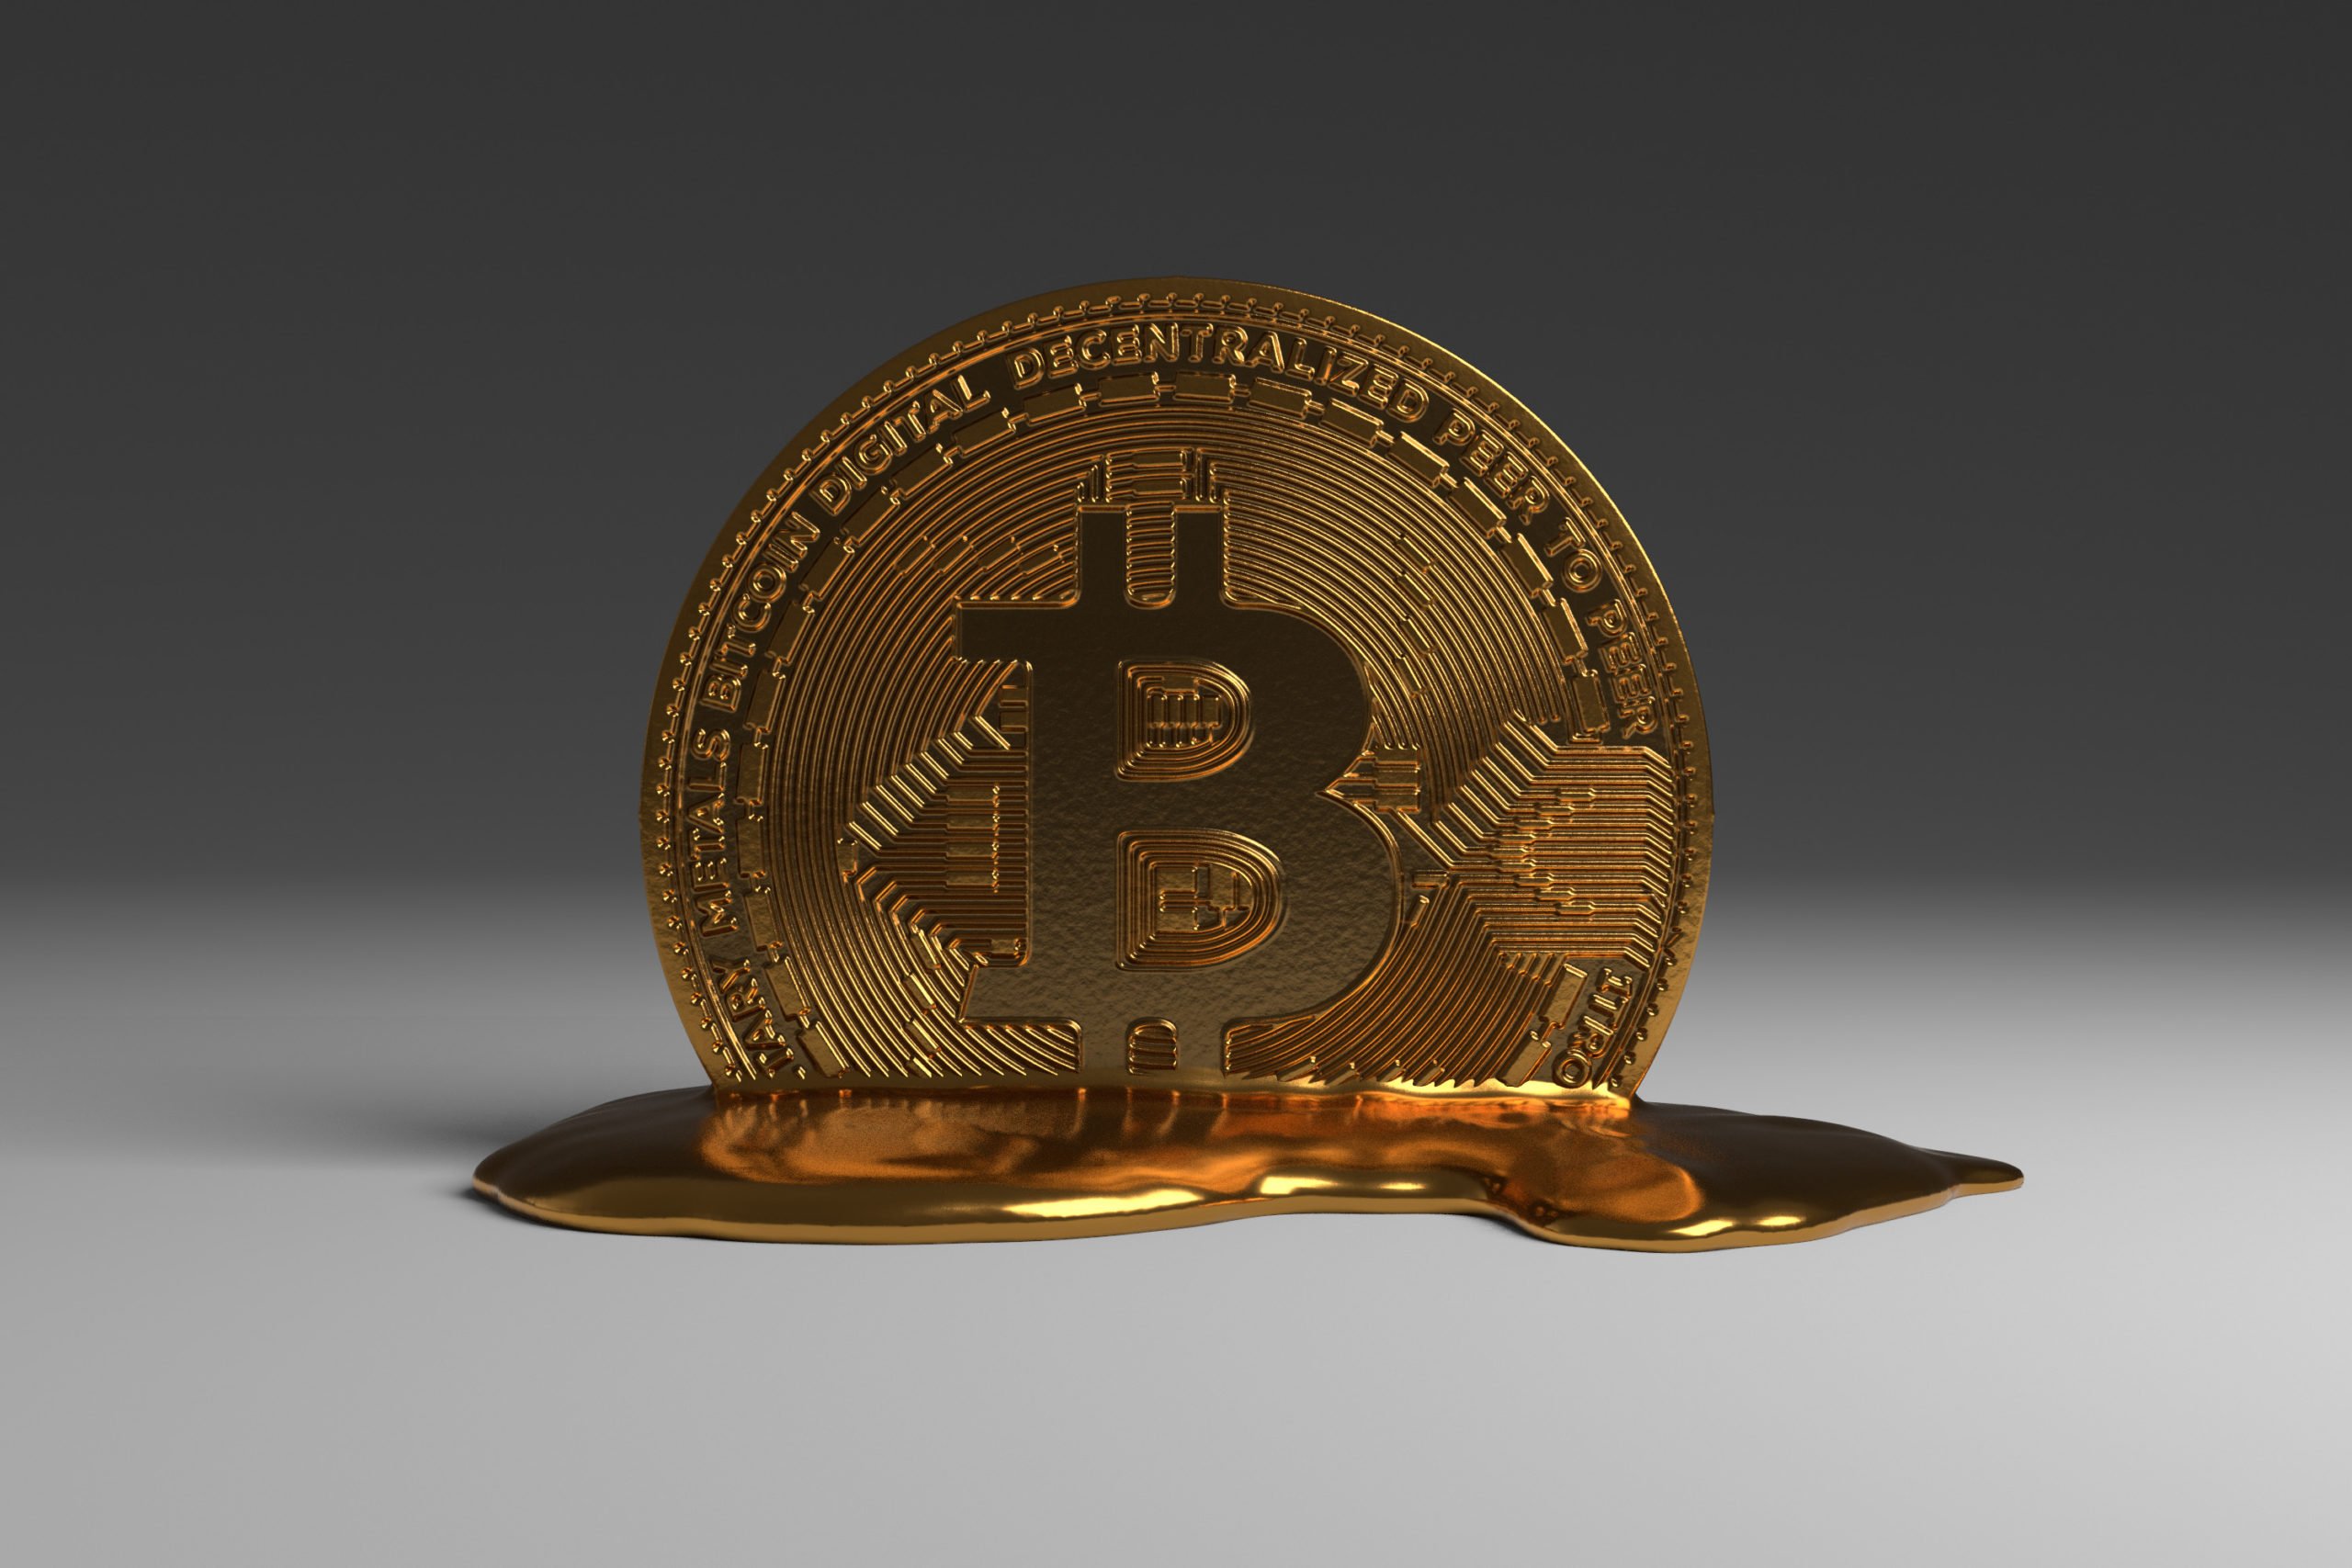 bitcoin crypto